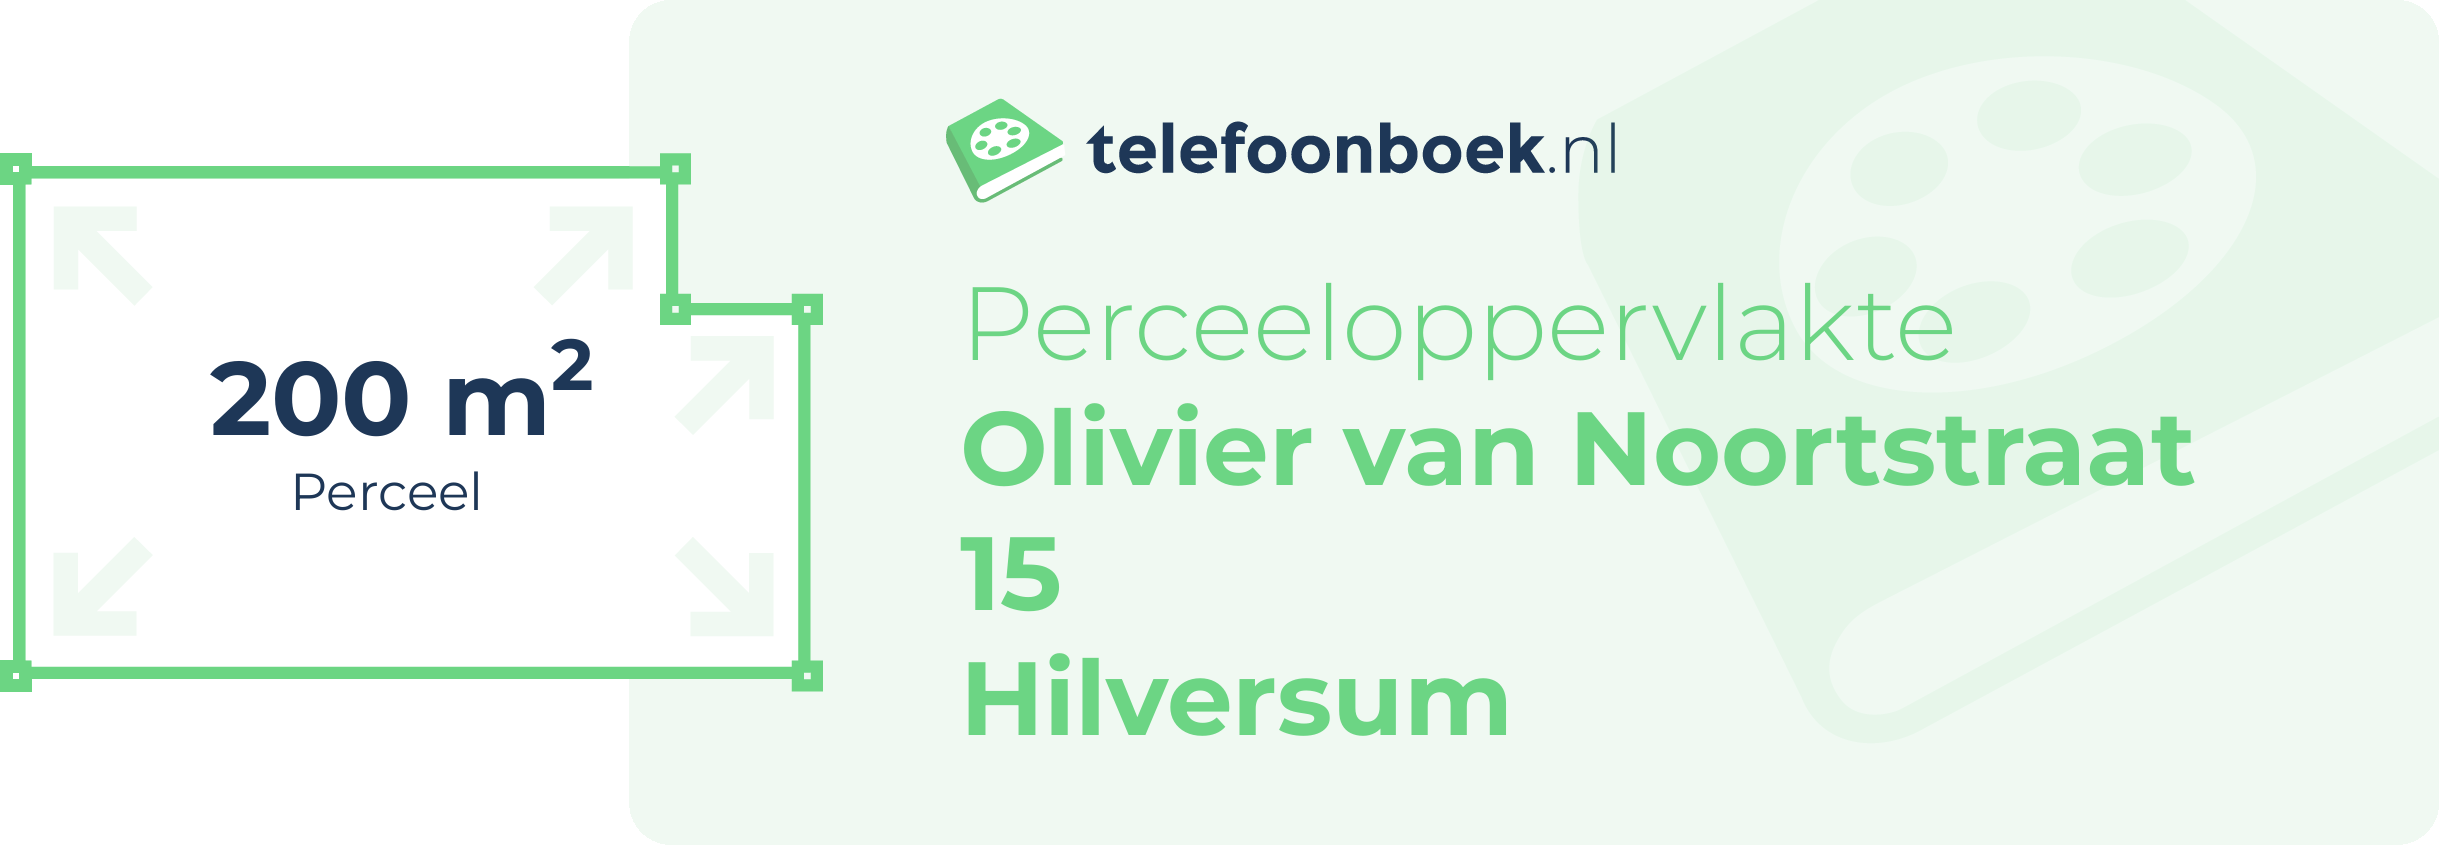 Perceeloppervlakte Olivier Van Noortstraat 15 Hilversum